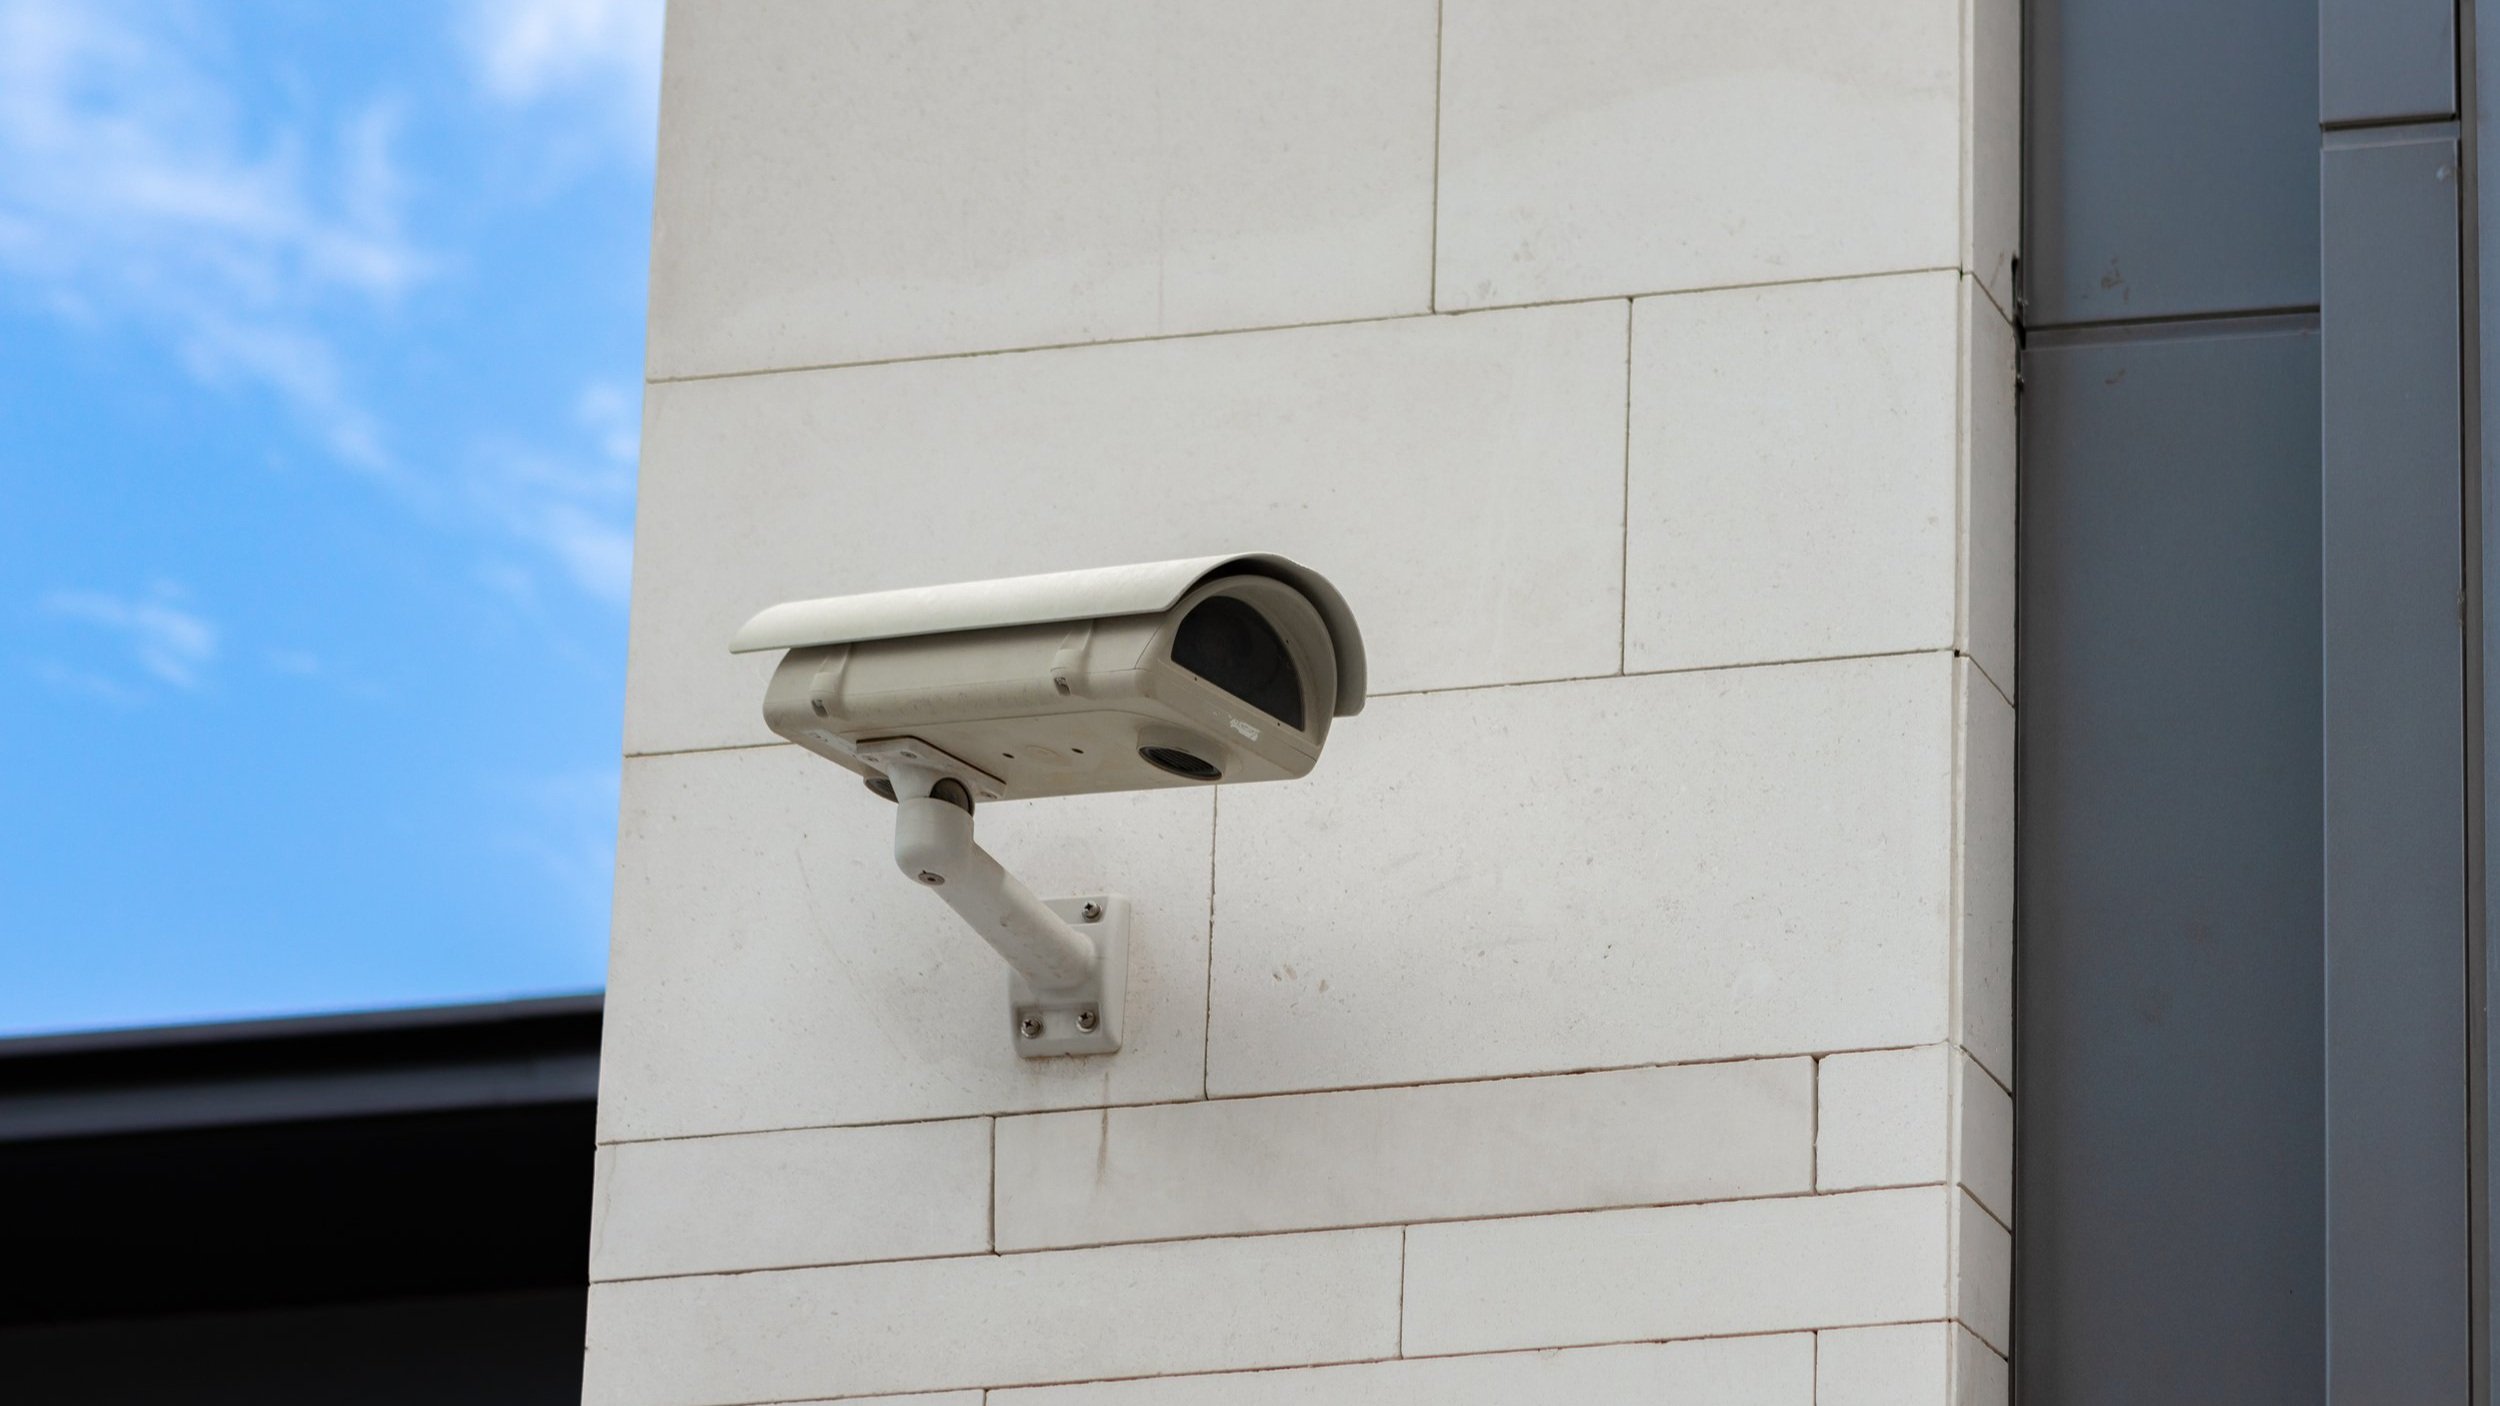 surveillance-camera-built-into-stone-wall-building.jpg